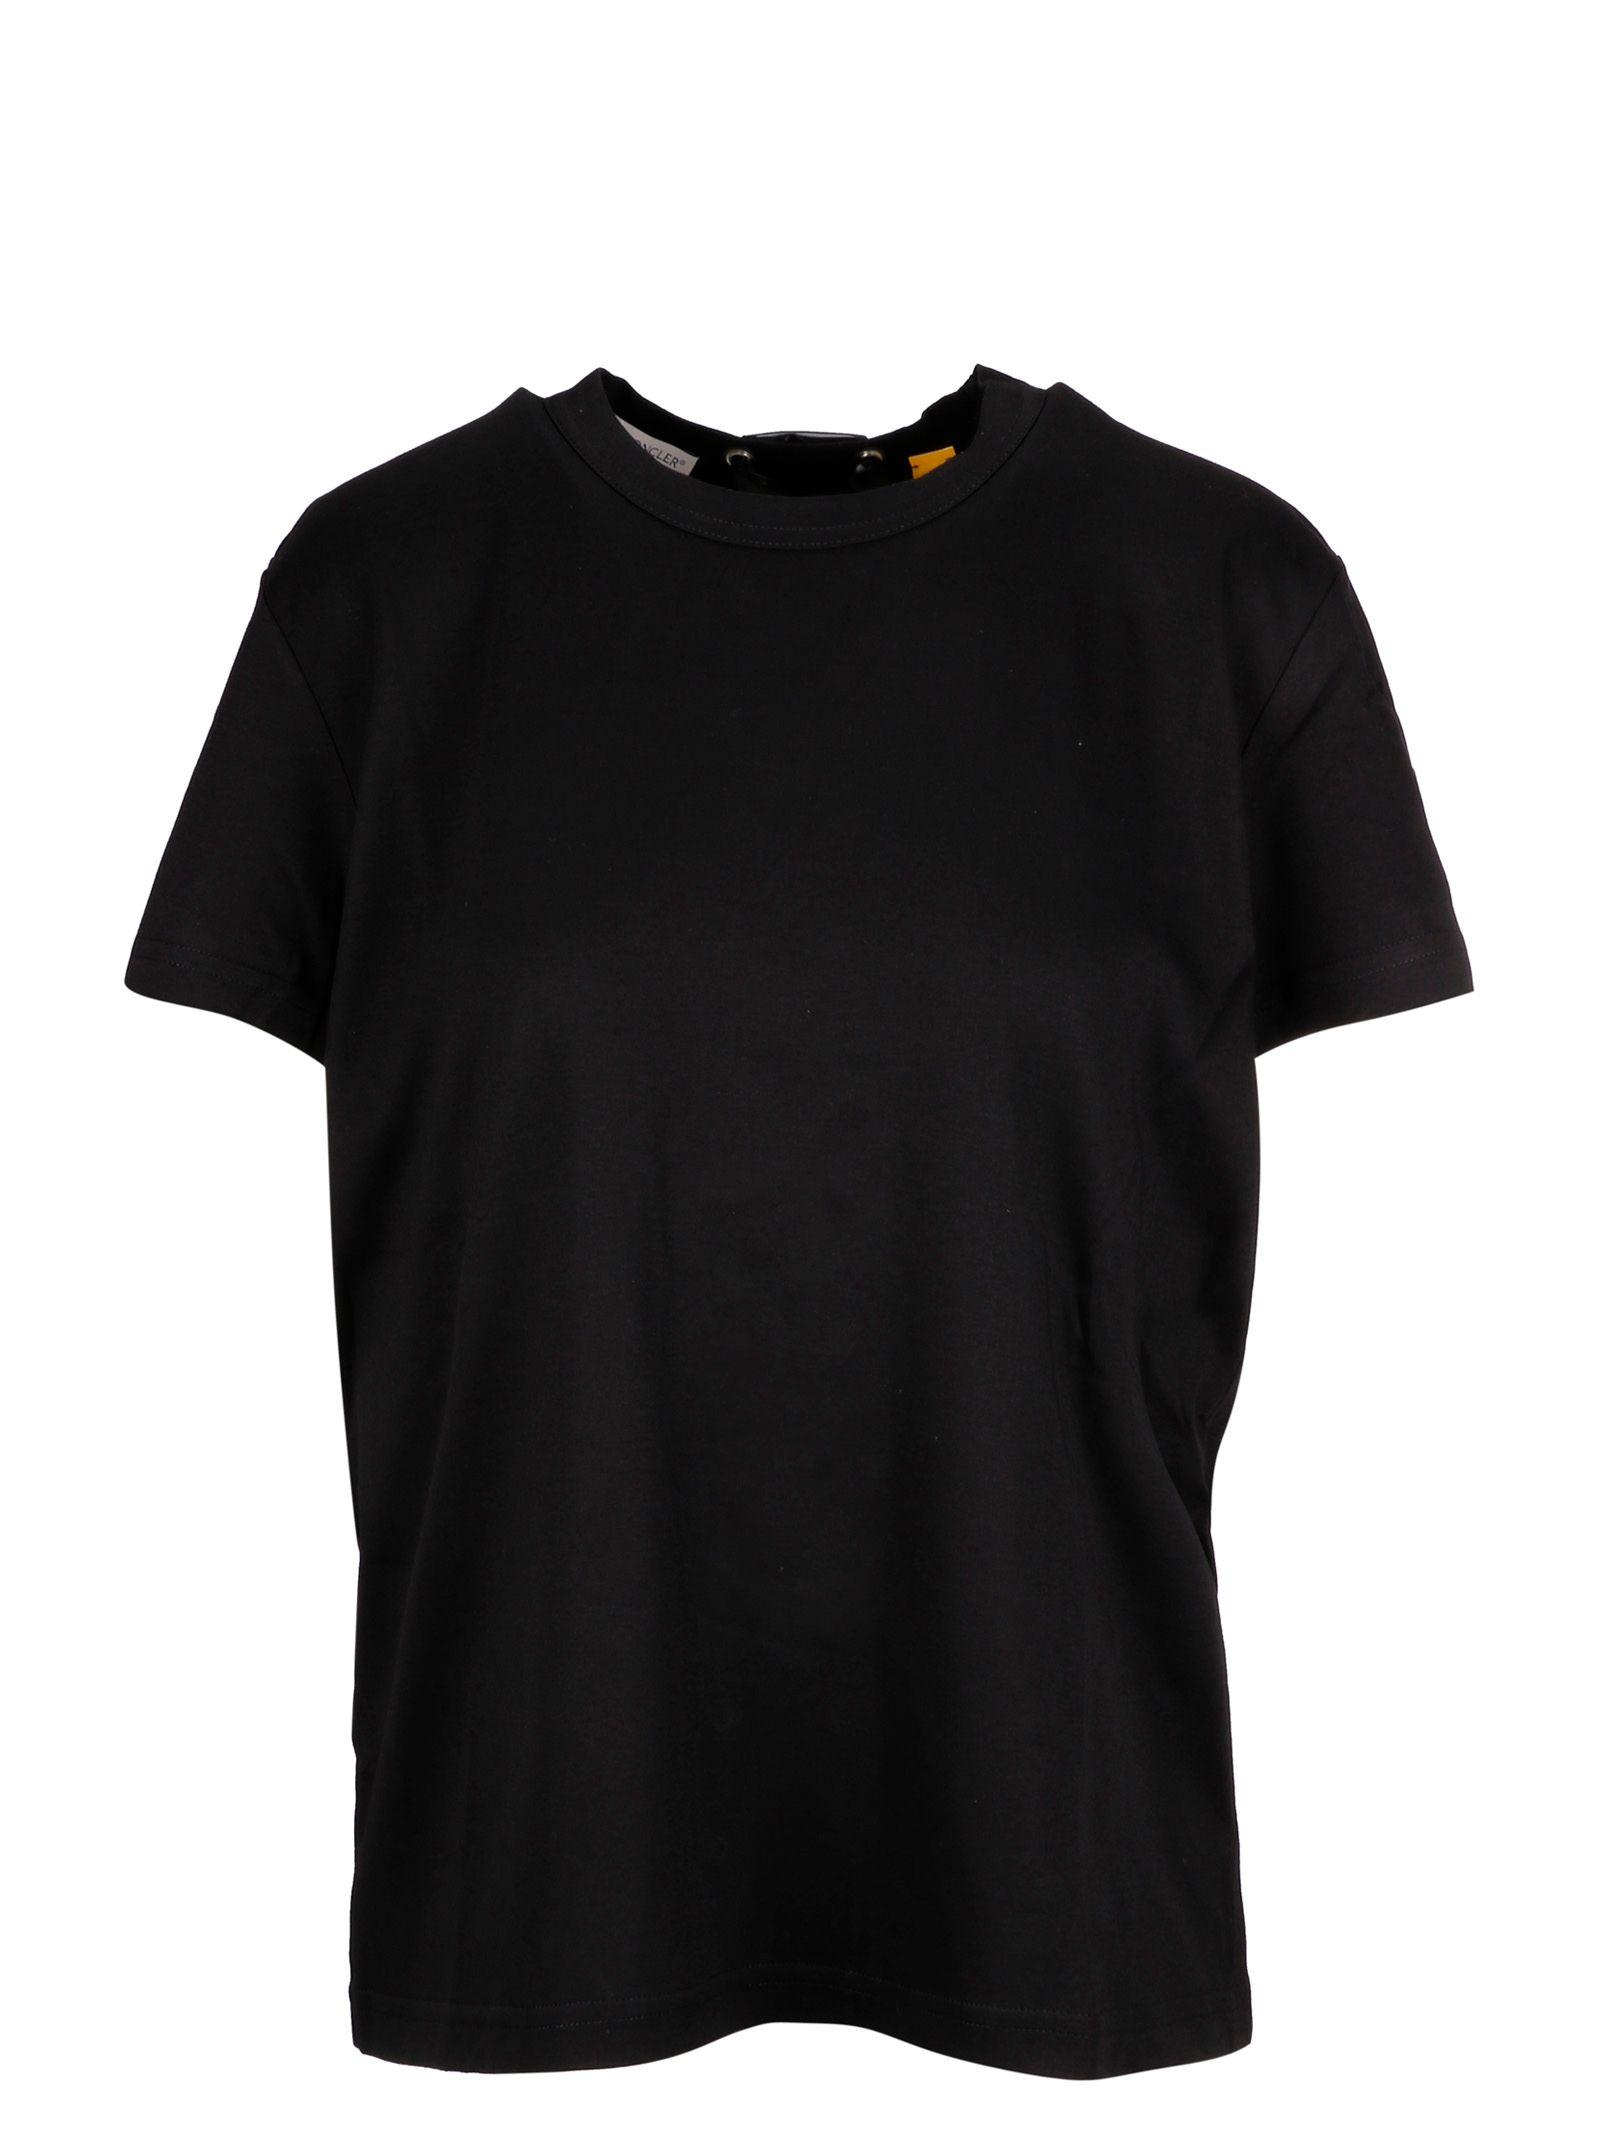 Moncler Black Cotton T-shirt in Black - Lyst